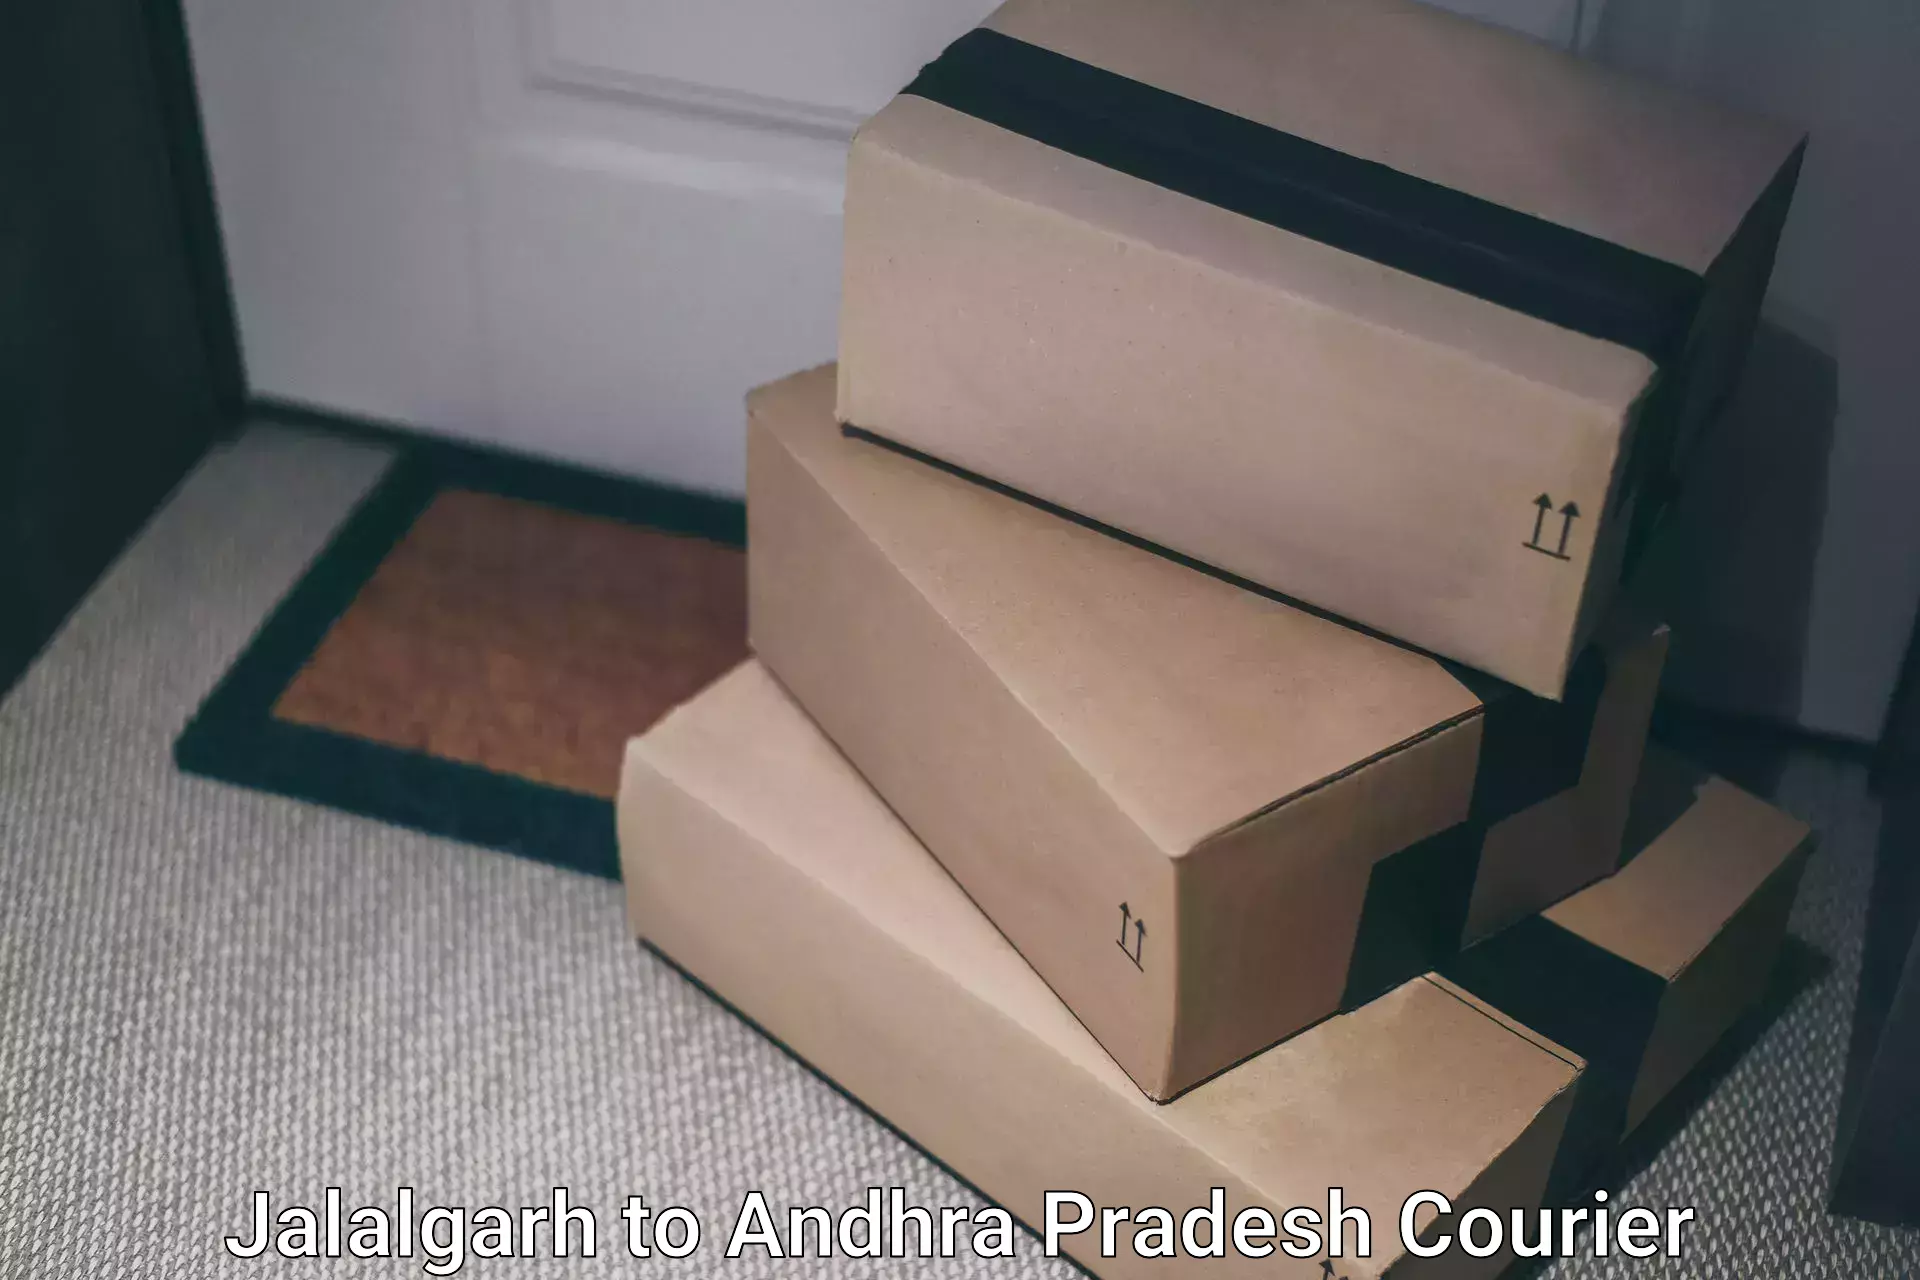 User-friendly delivery service Jalalgarh to Andhra Pradesh